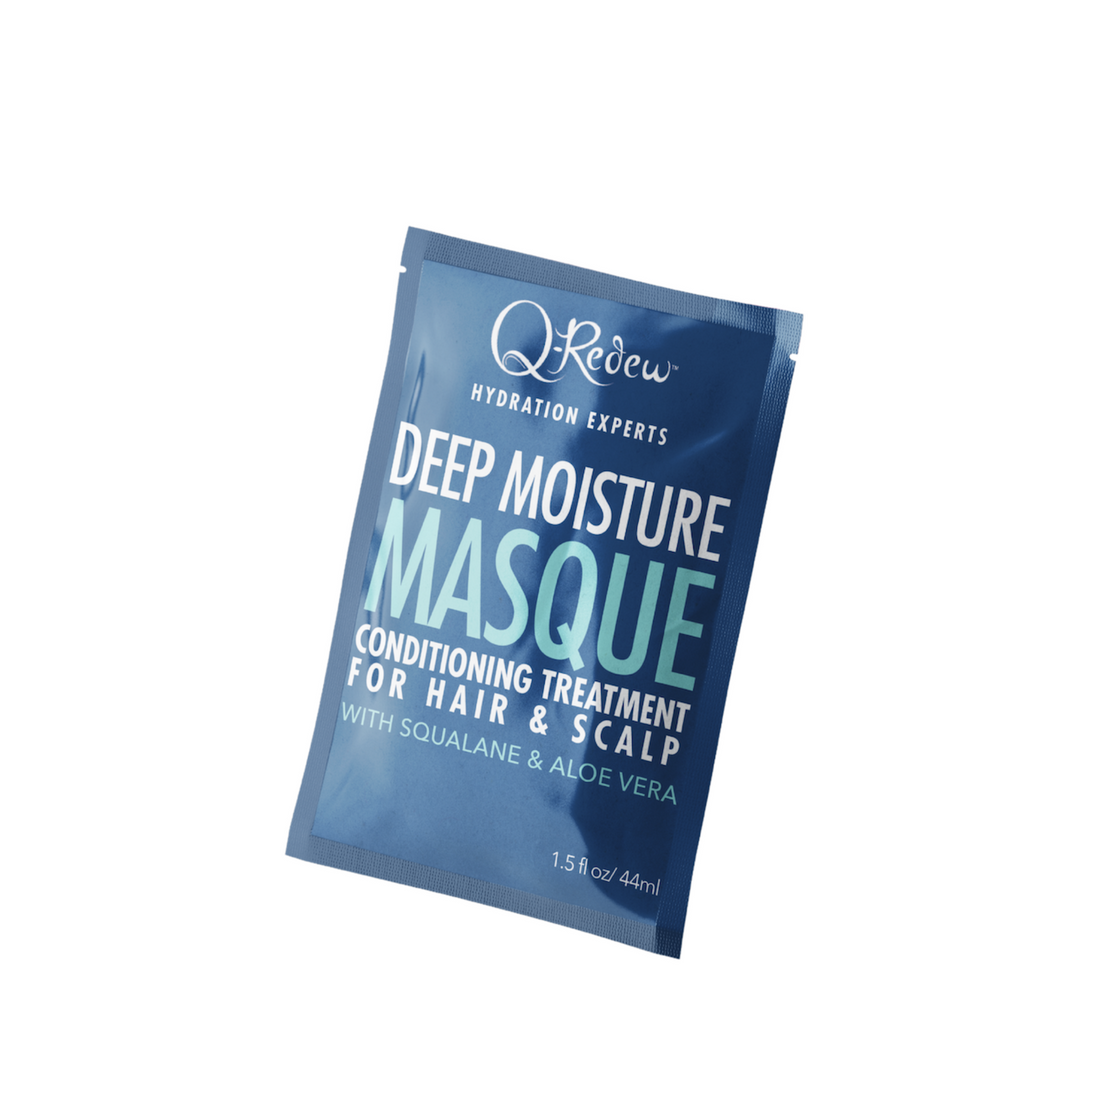 Q-Redew Deep Moisture Masque Hair Mask Sample Packet